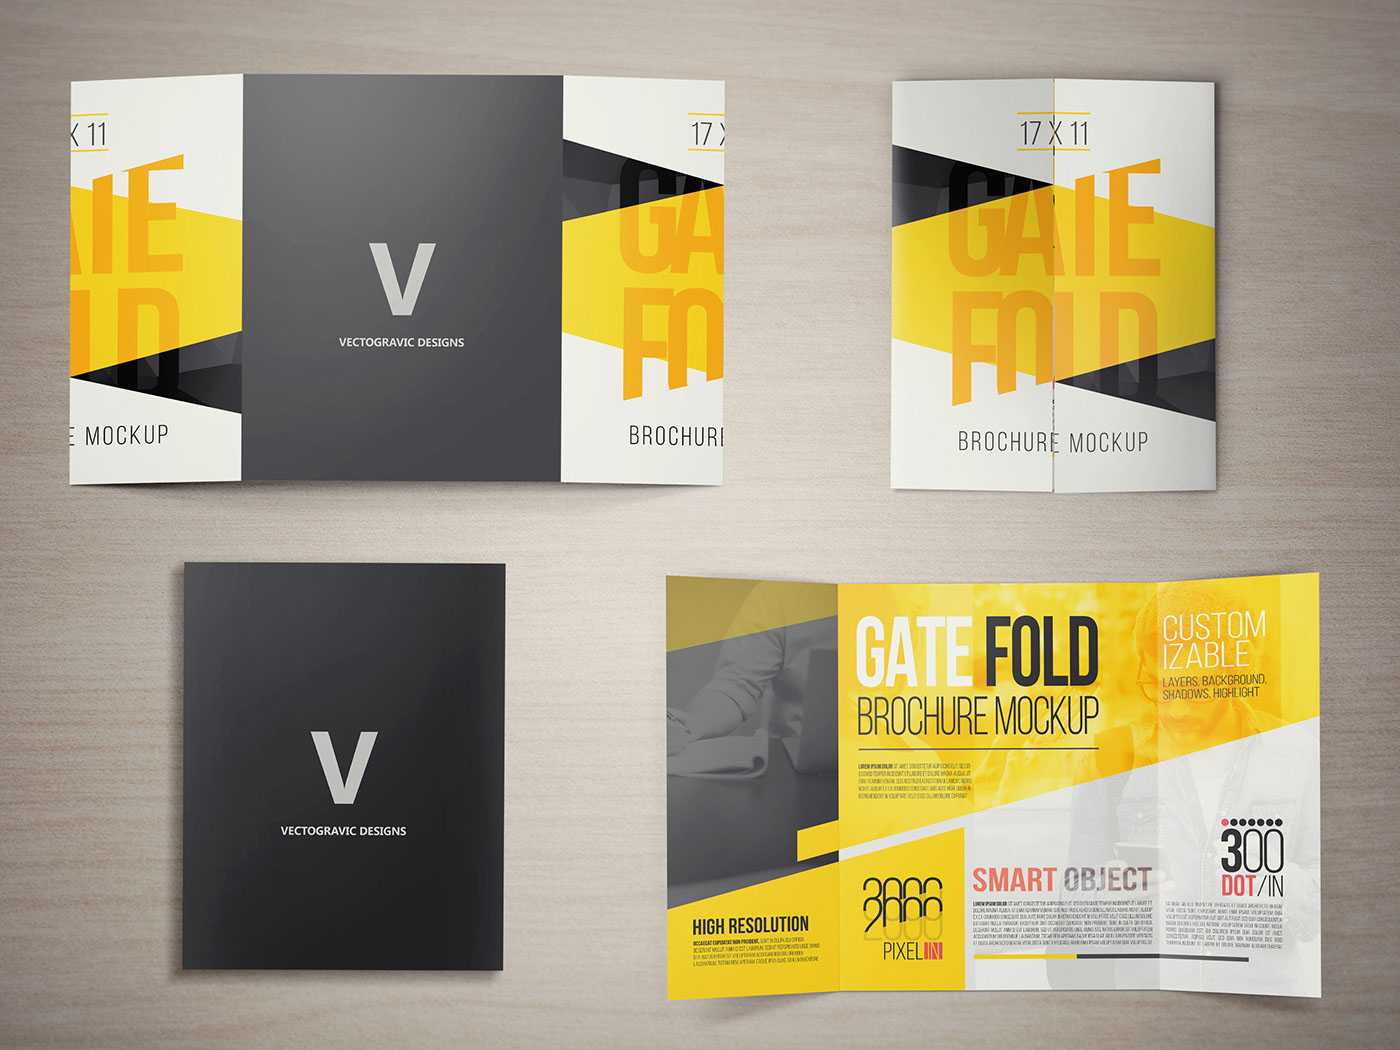 17 X 11 Gate Fold Brochure Mockup On Behance Within Gate Fold Brochure Template